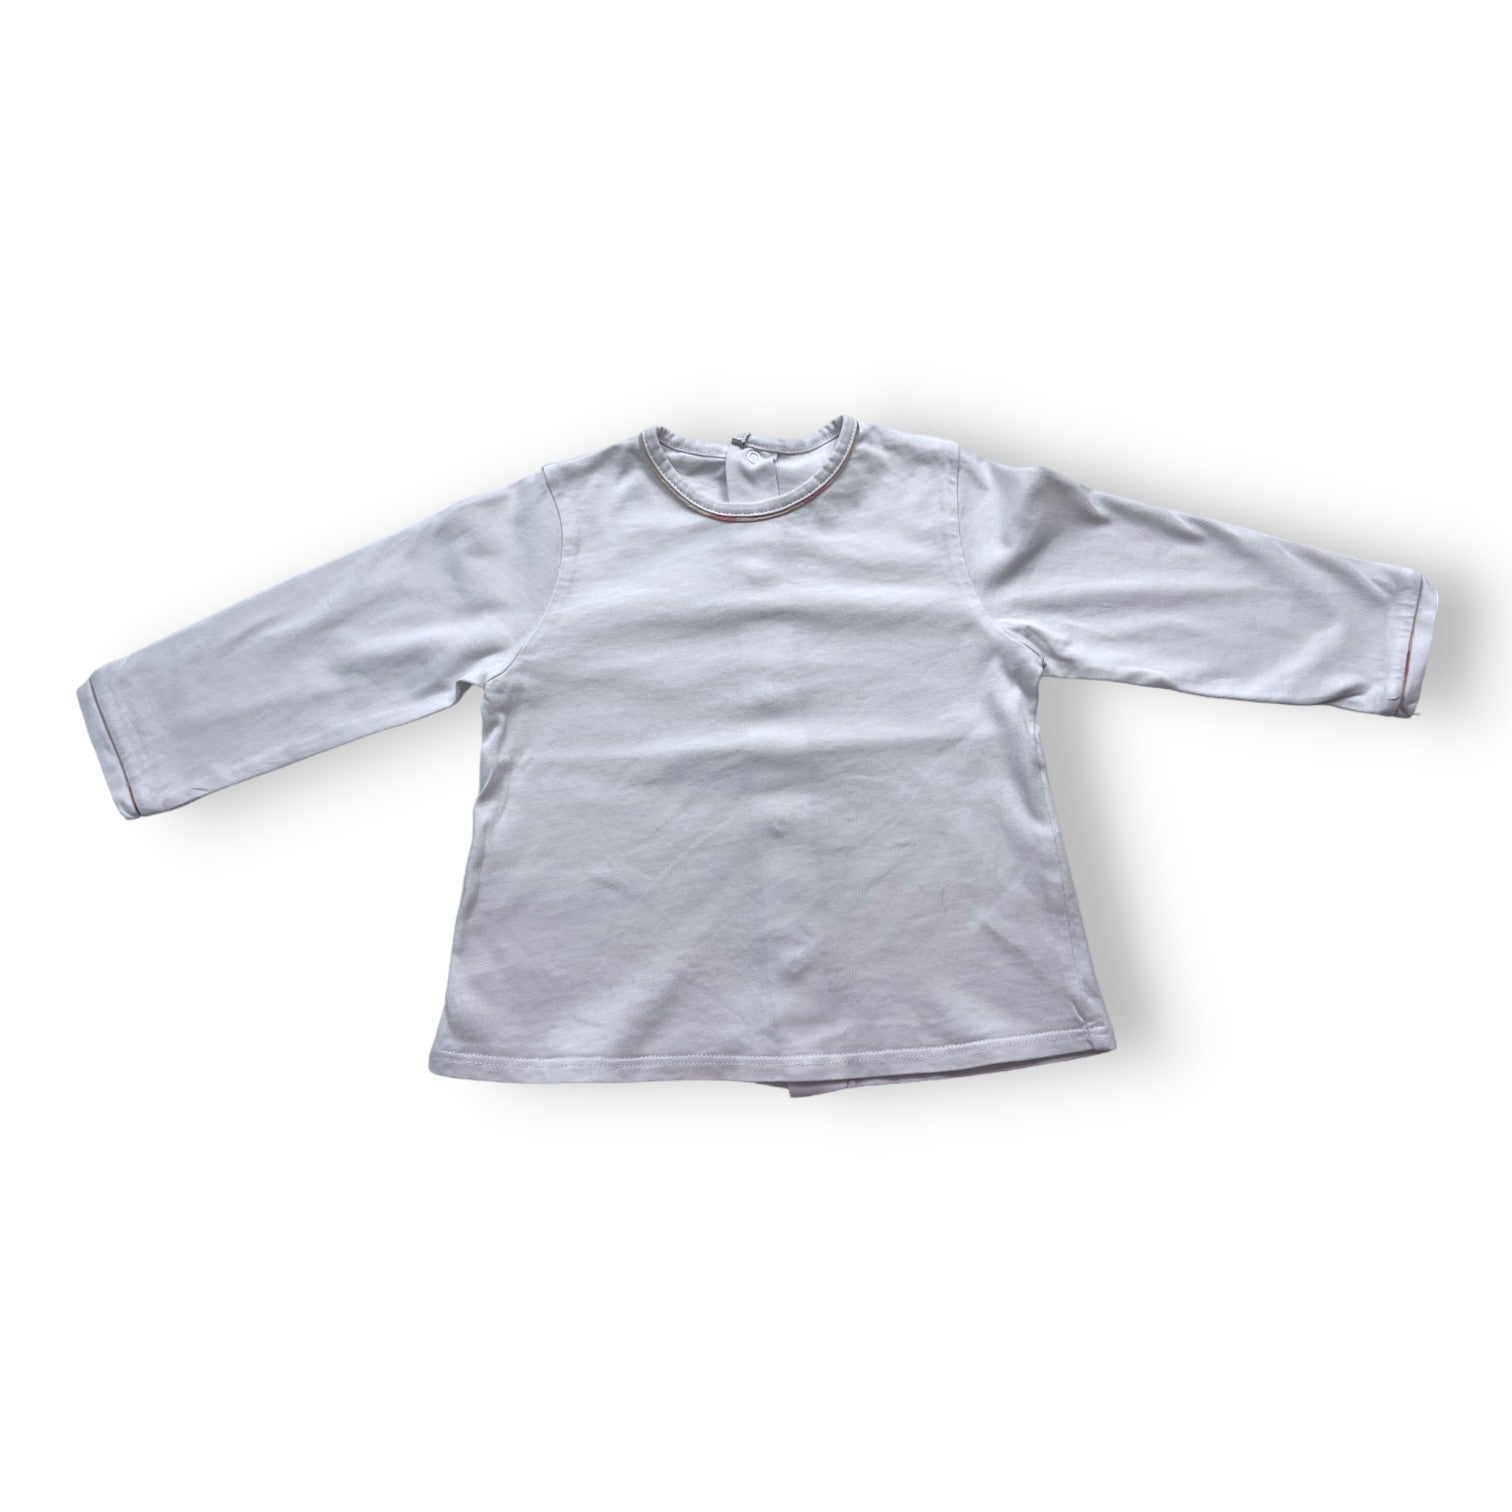 BURBERRY - T shirt manches longues blanc - 12 mois